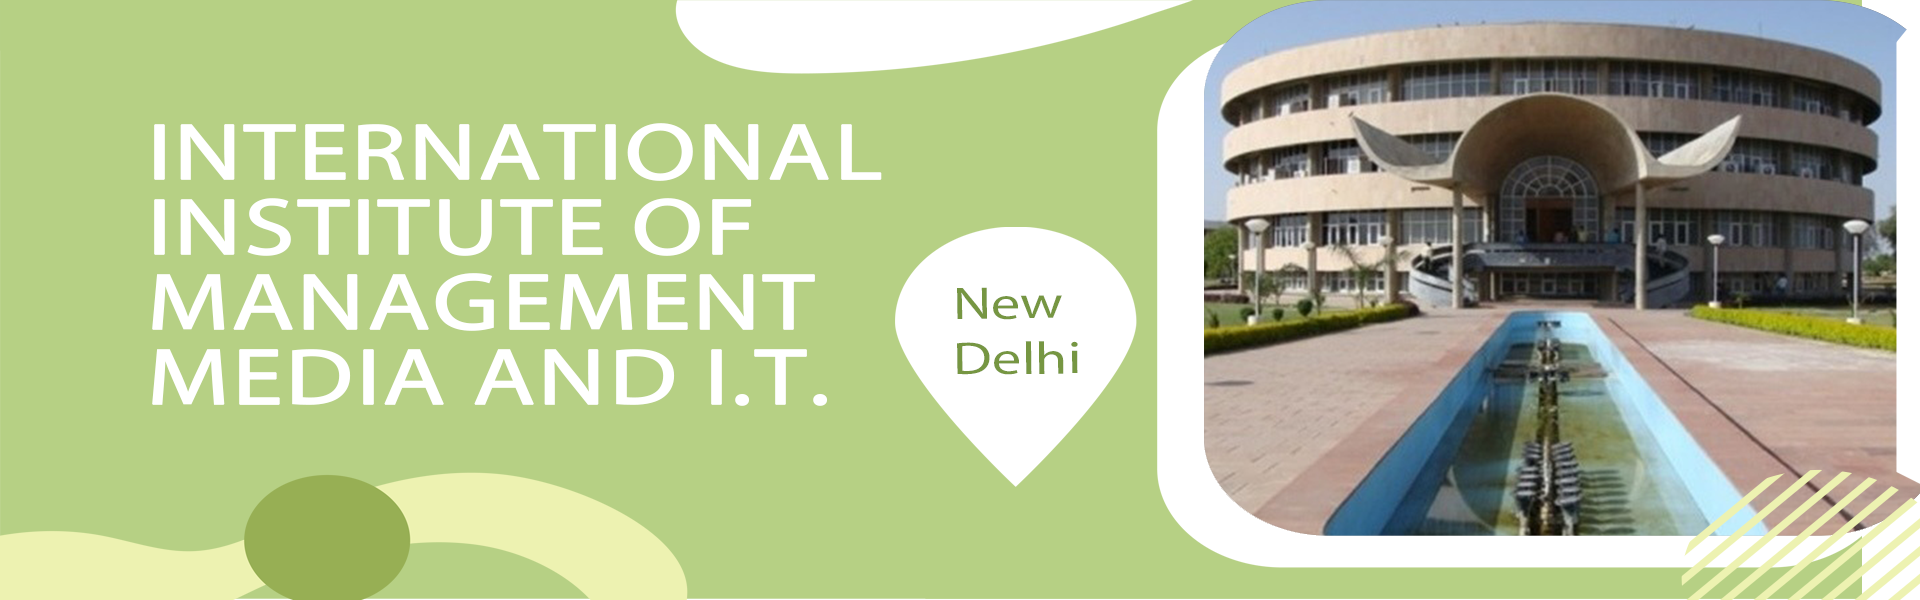 International Institute Of Management Media And I.T. - [IIMMI], New Delhi